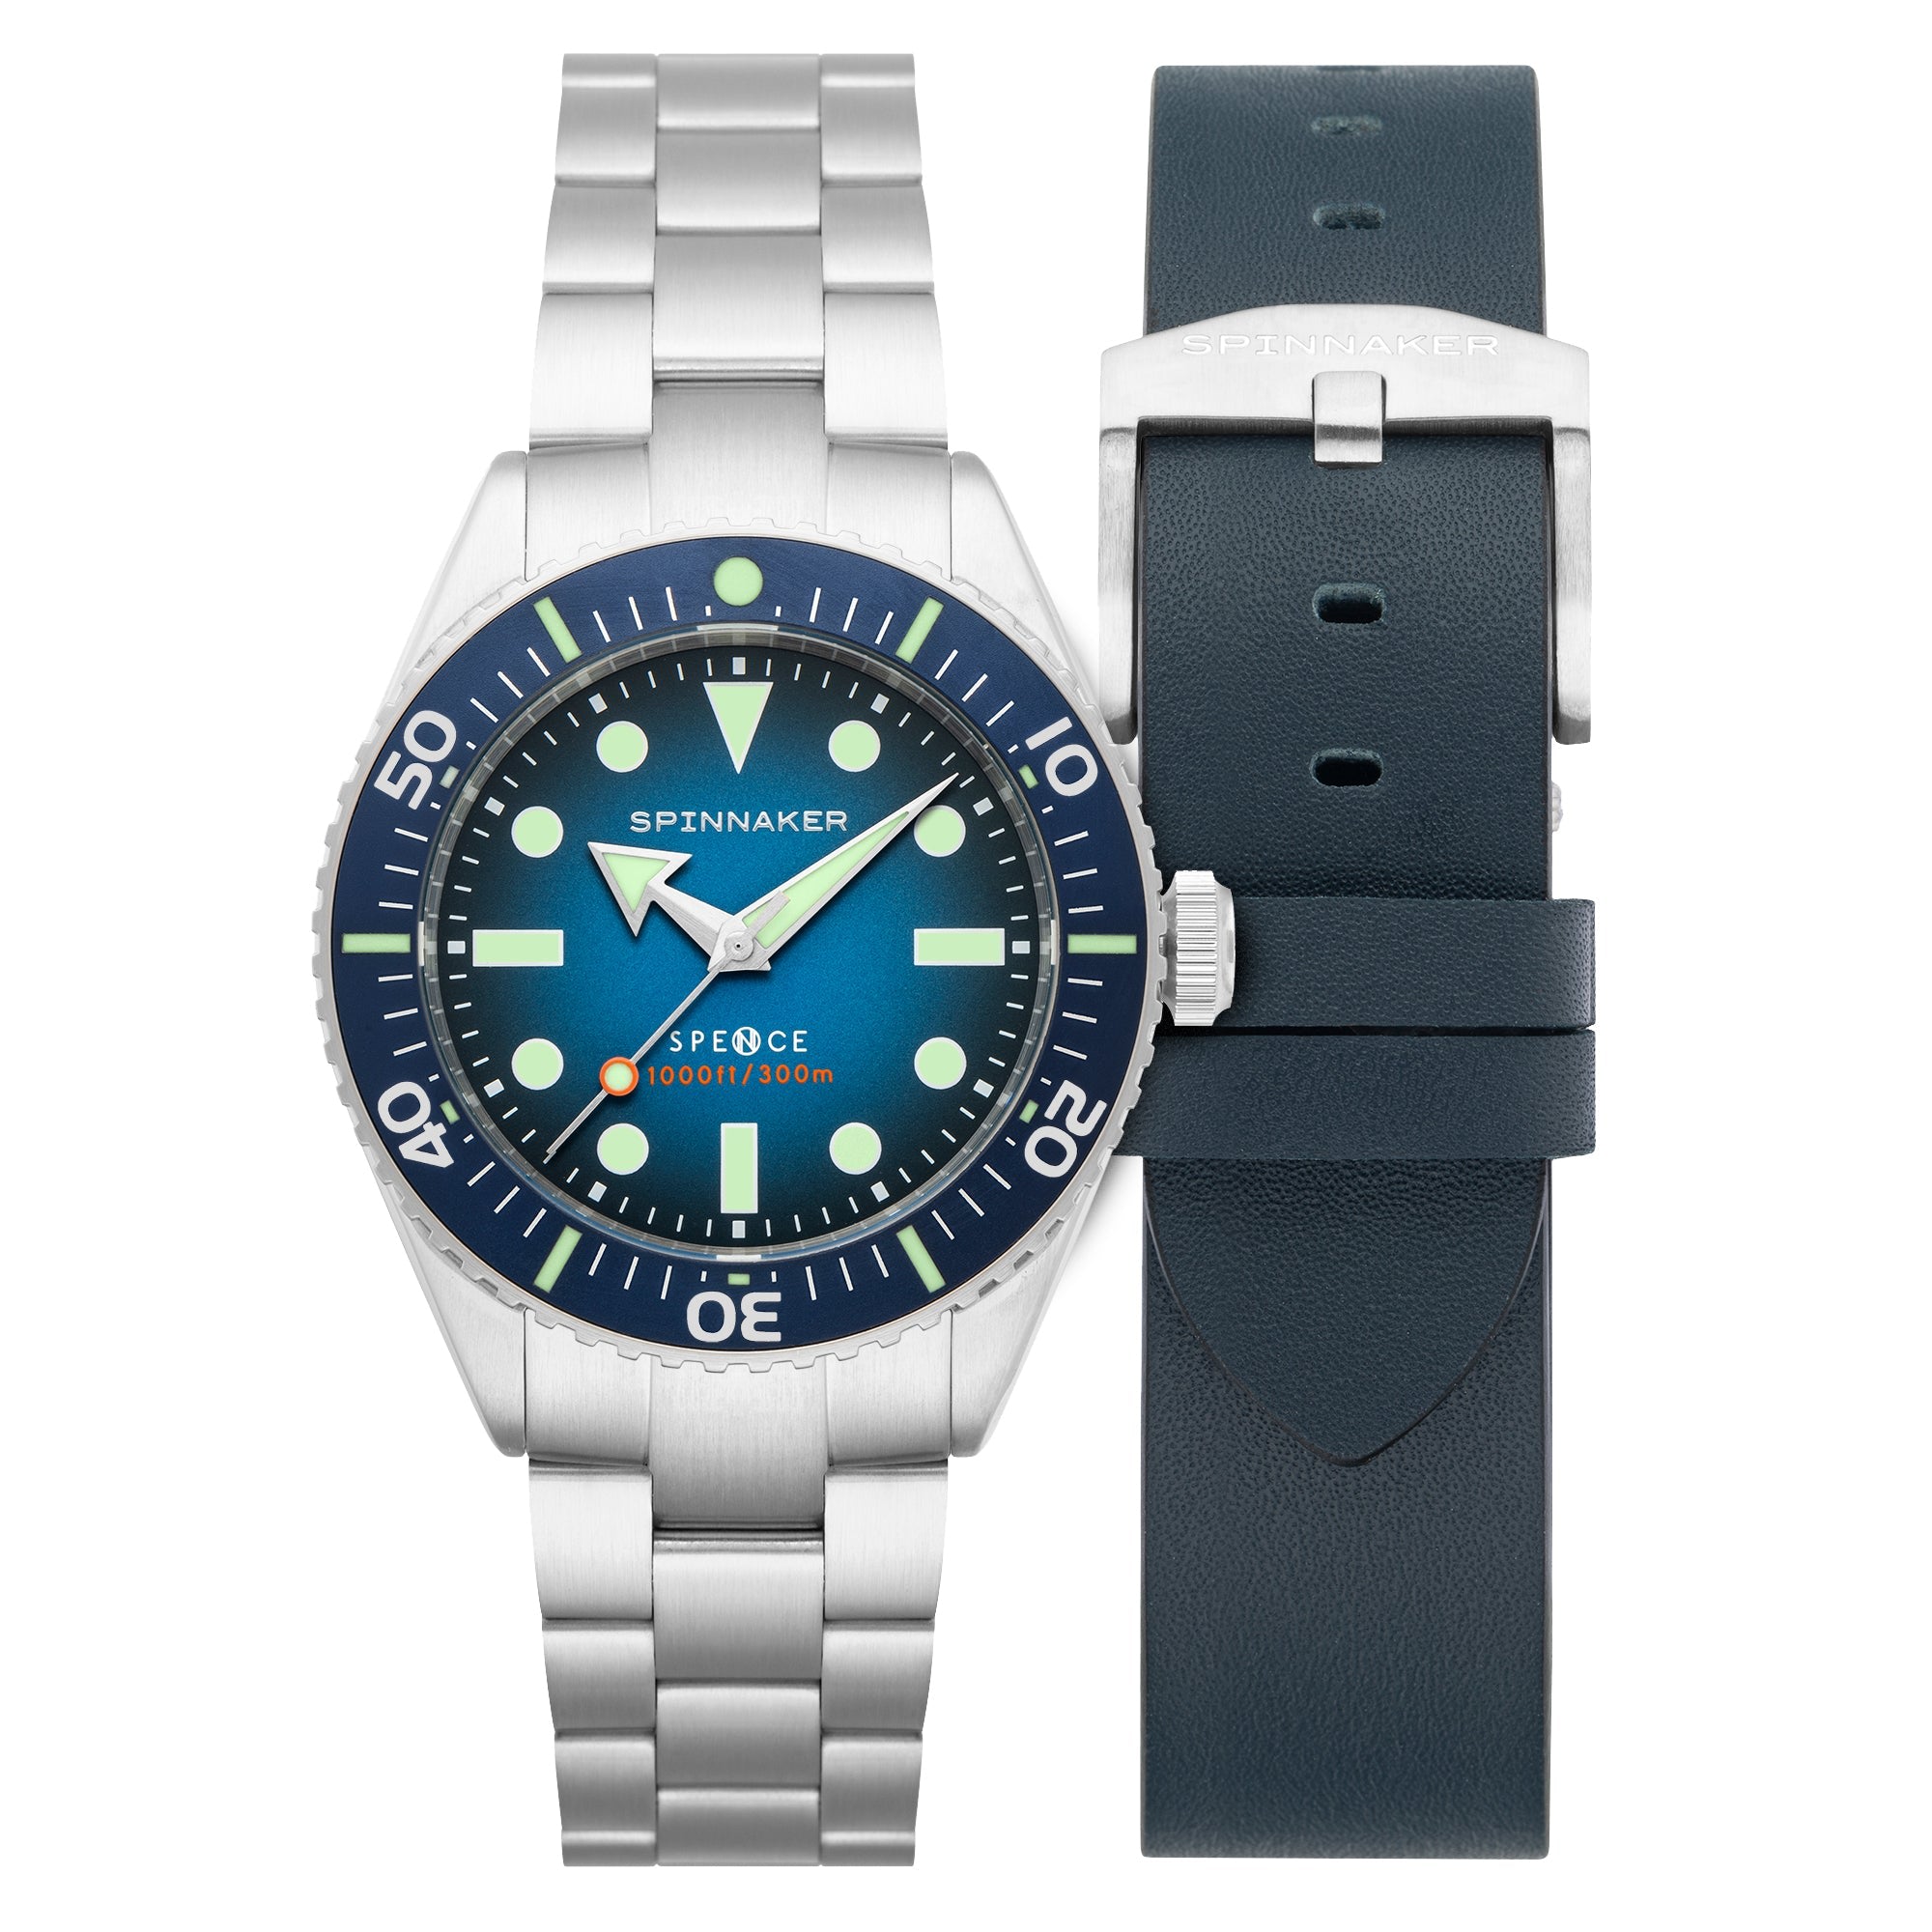 Spinnaker Spence Men’s Japanese Automatic Indigo Blue Watch One Size